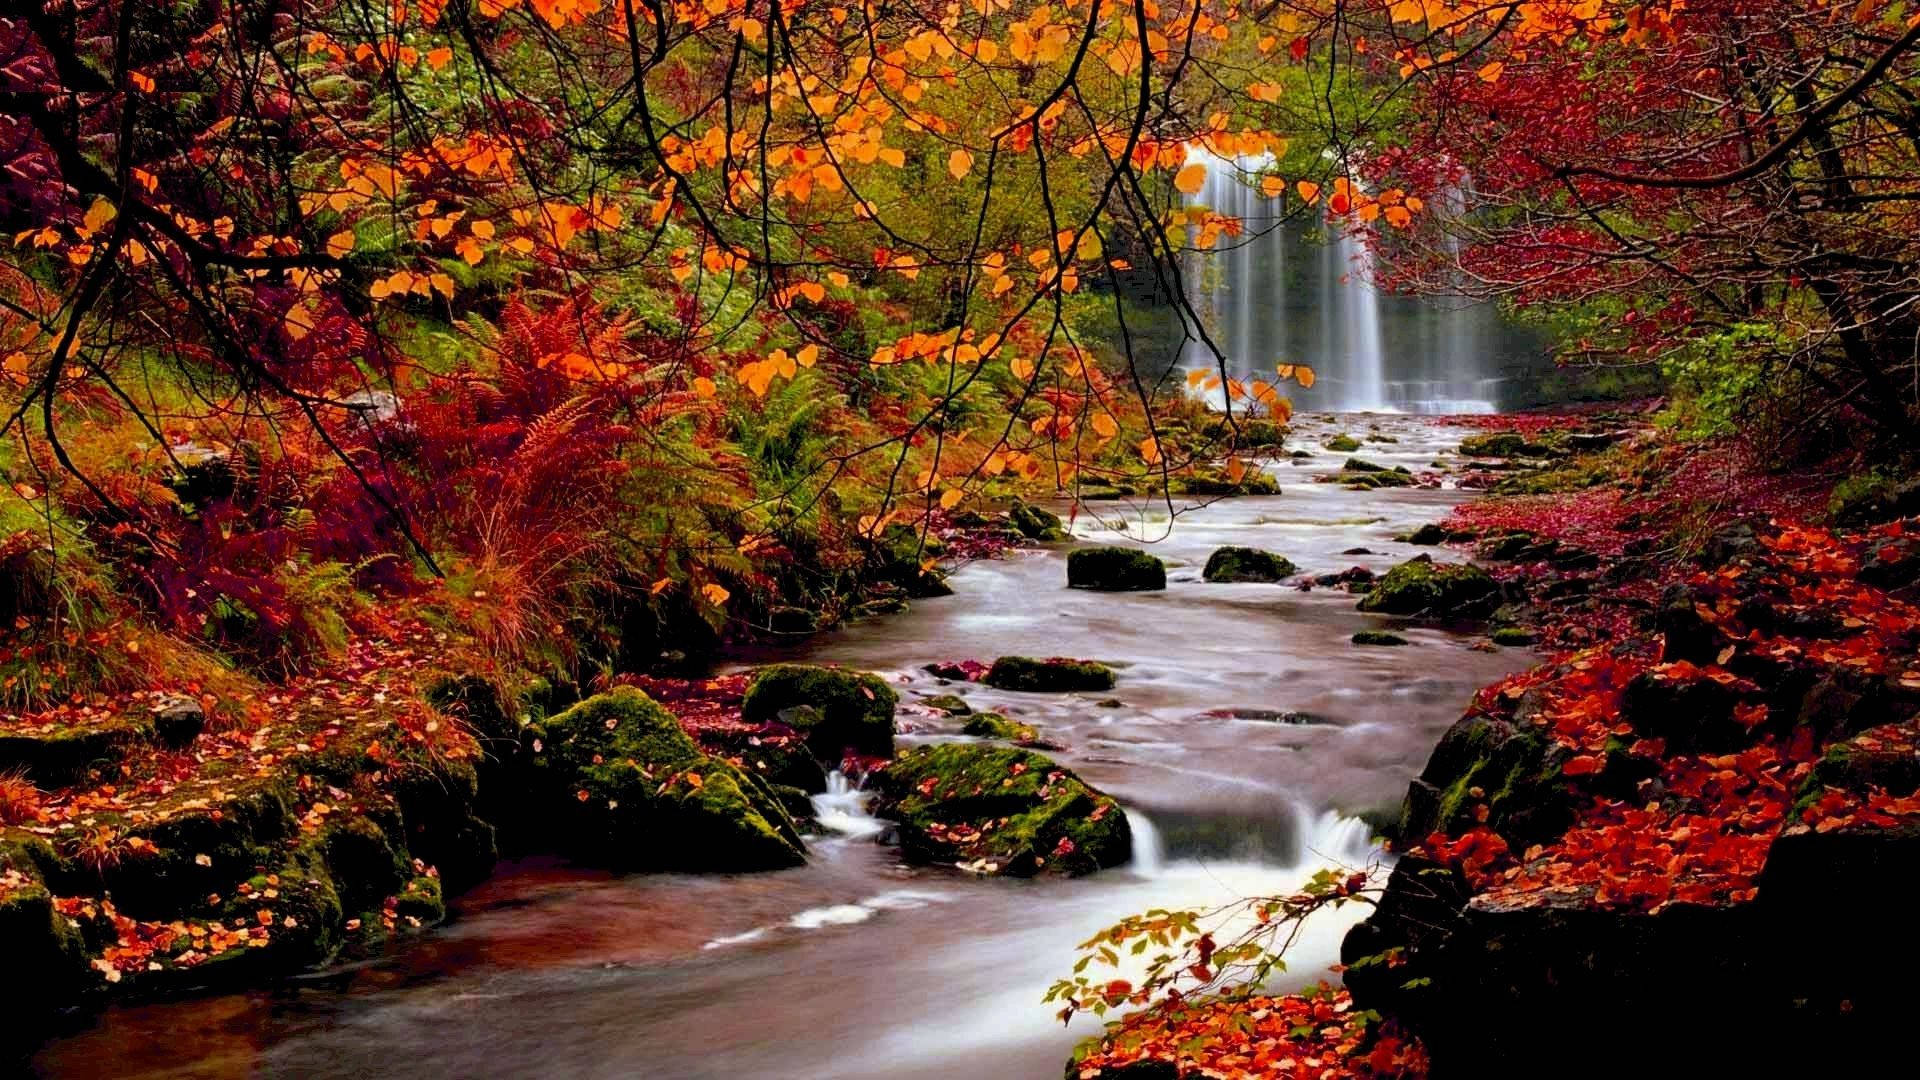 Free Beautiful Autumn Desktop Wallpaper Downloads, [100+] Beautiful Autumn Desktop  Wallpapers for FREE 